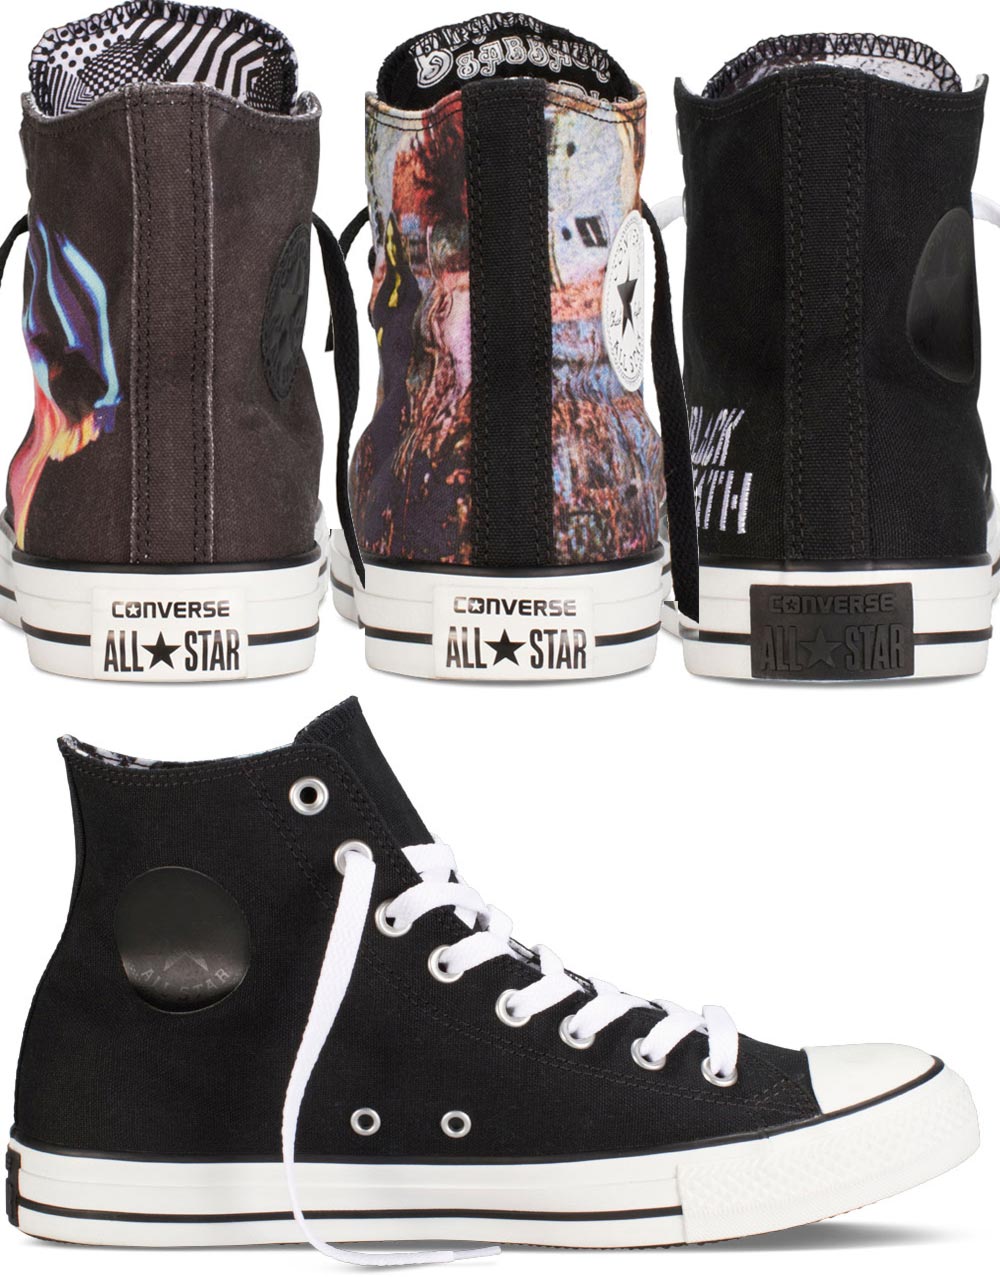 Converse Black Sabbath Chuck Taylor sneakers collection - StyleFrizz |  Photo Gallery